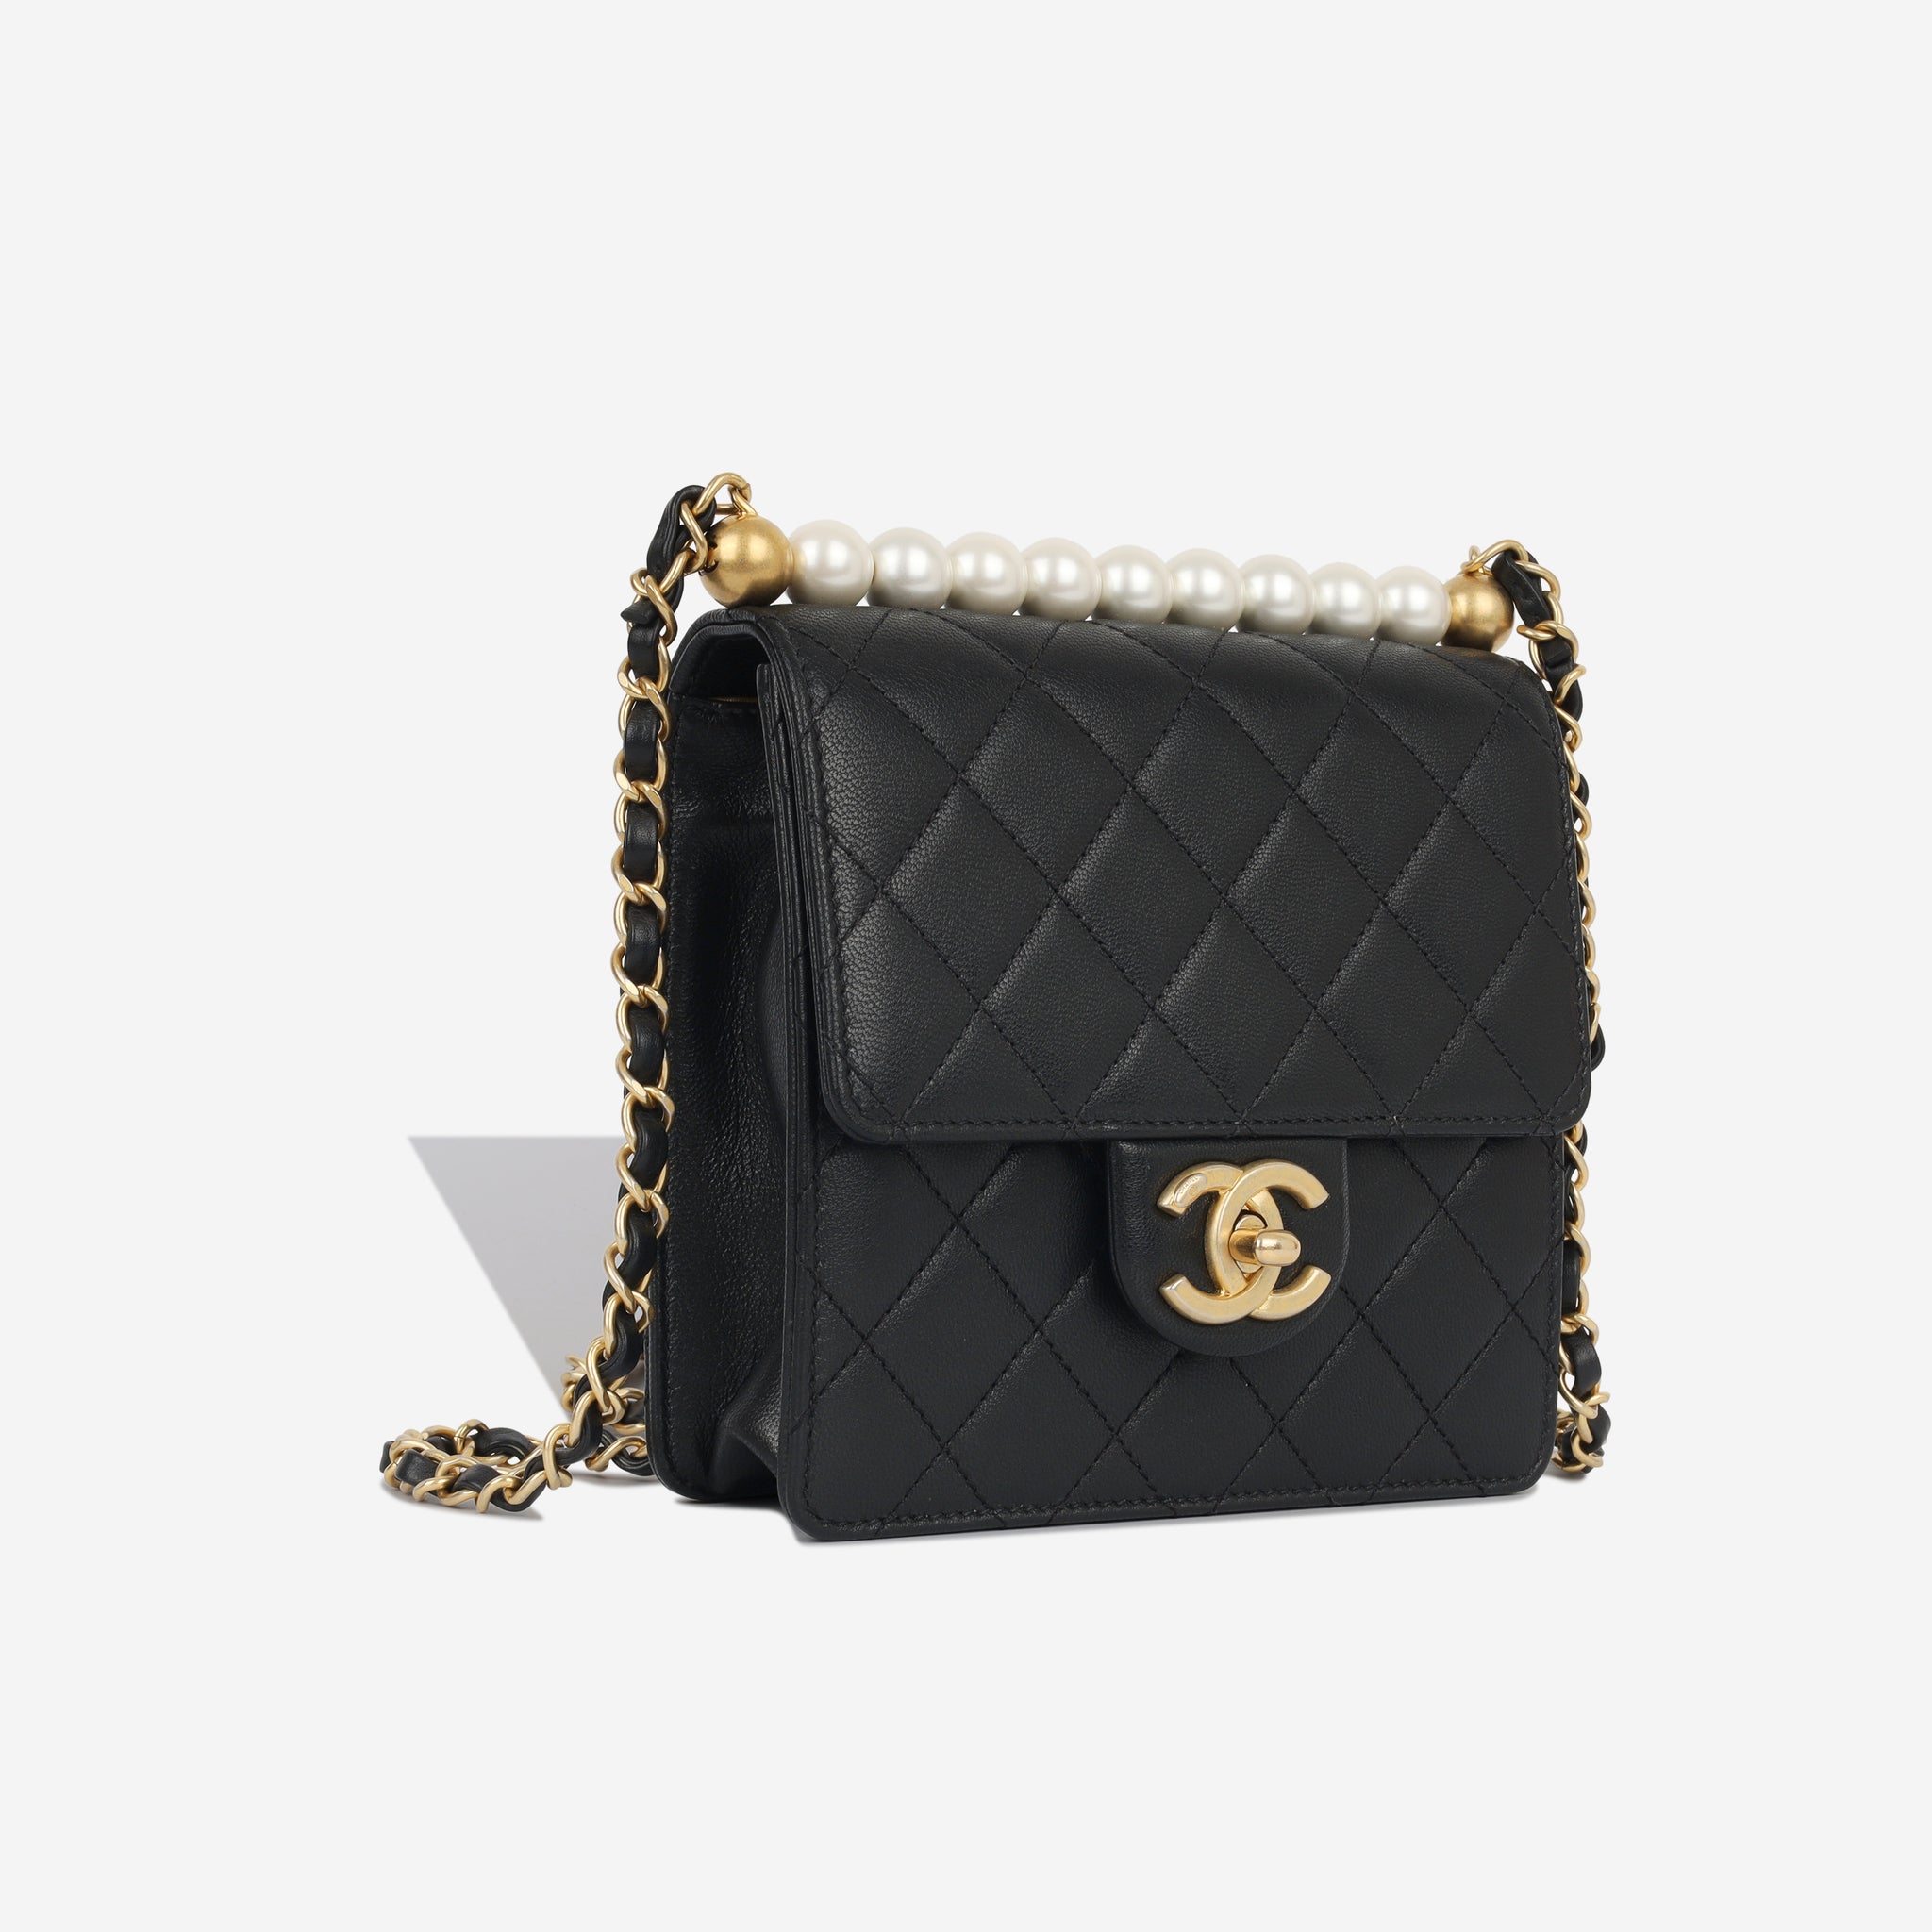 Chanel Black Leather Medium Chic Pearls Flap Bag Chanel